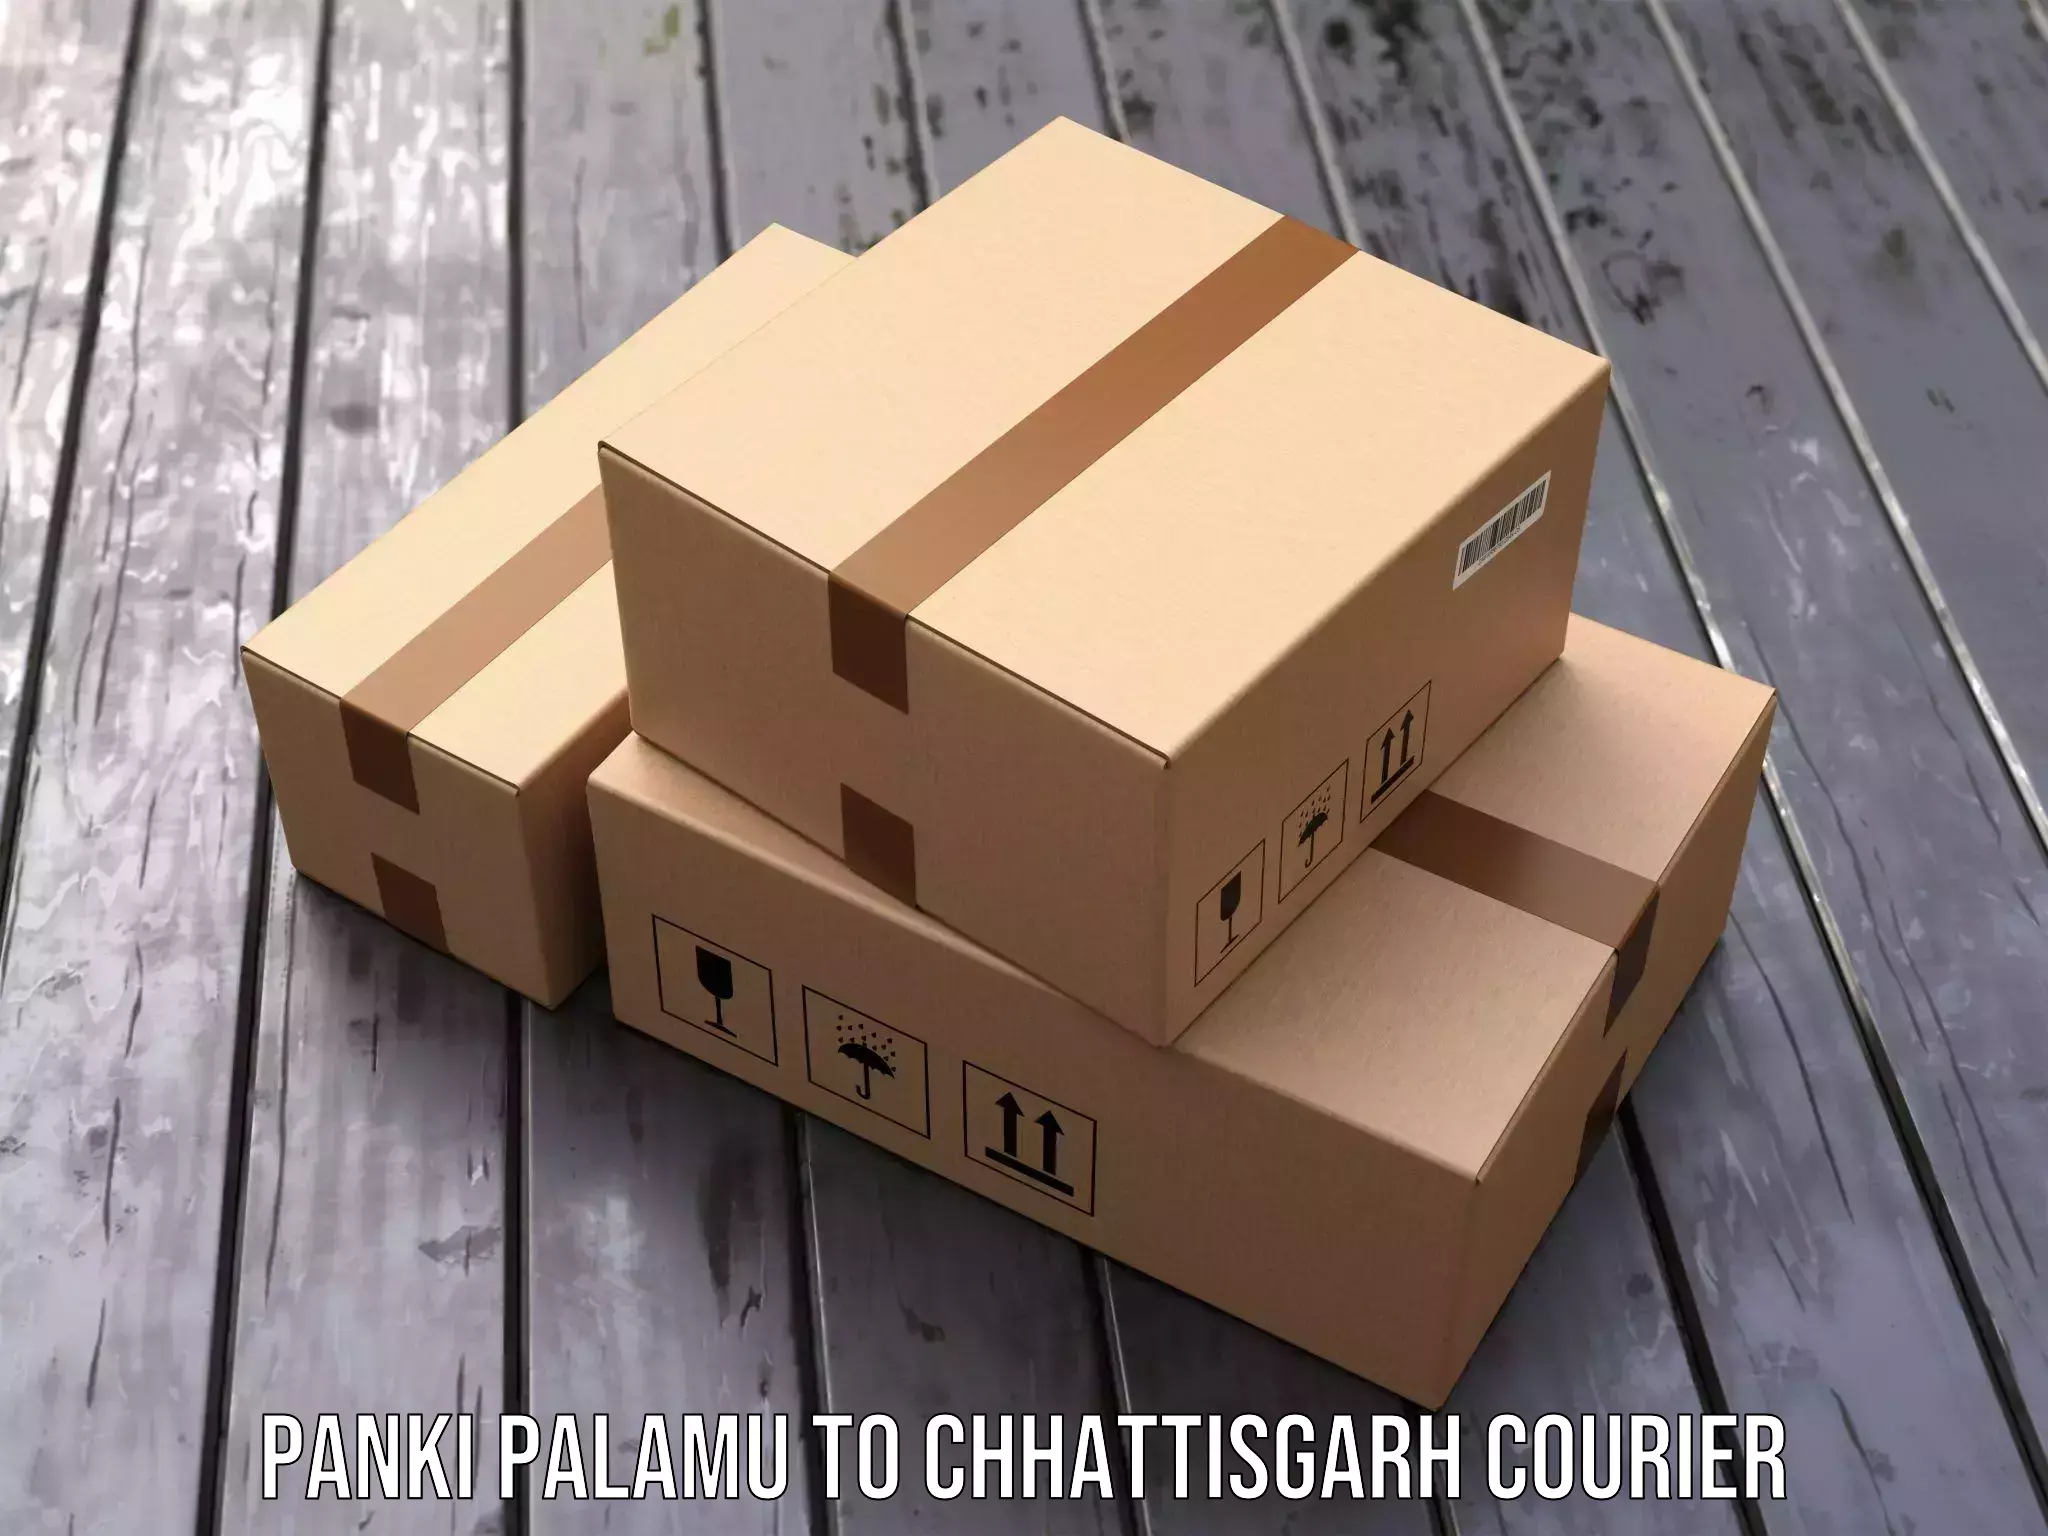 State-of-the-art courier technology Panki Palamu to Mandhar